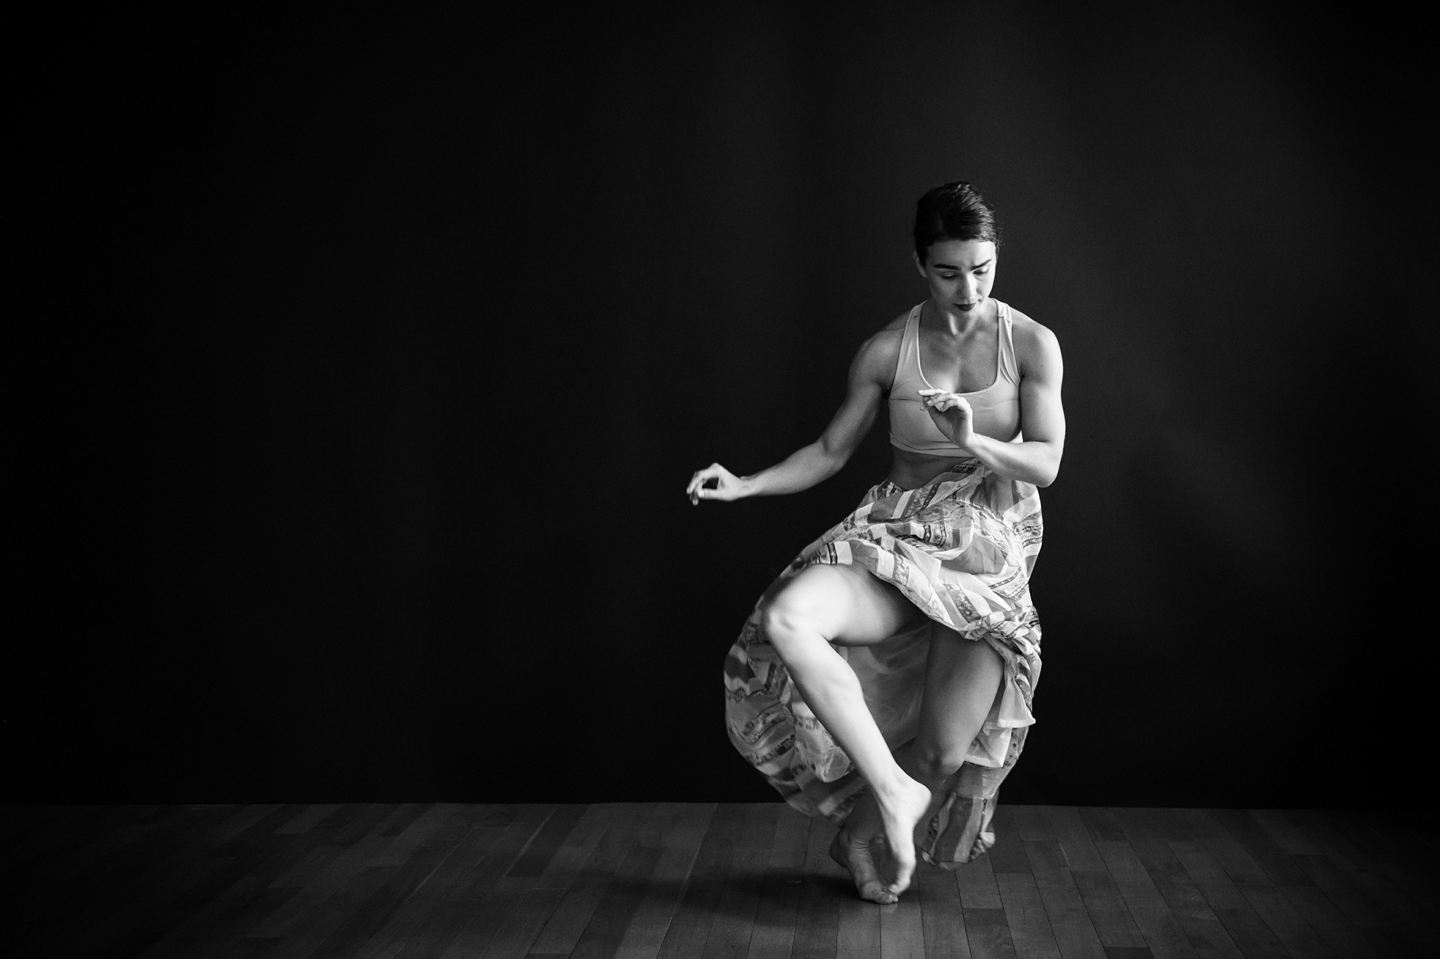 Los Angeles Dance Portrait Photo - Olga Sokolova - by Tommy Xing Photography 17.JPG